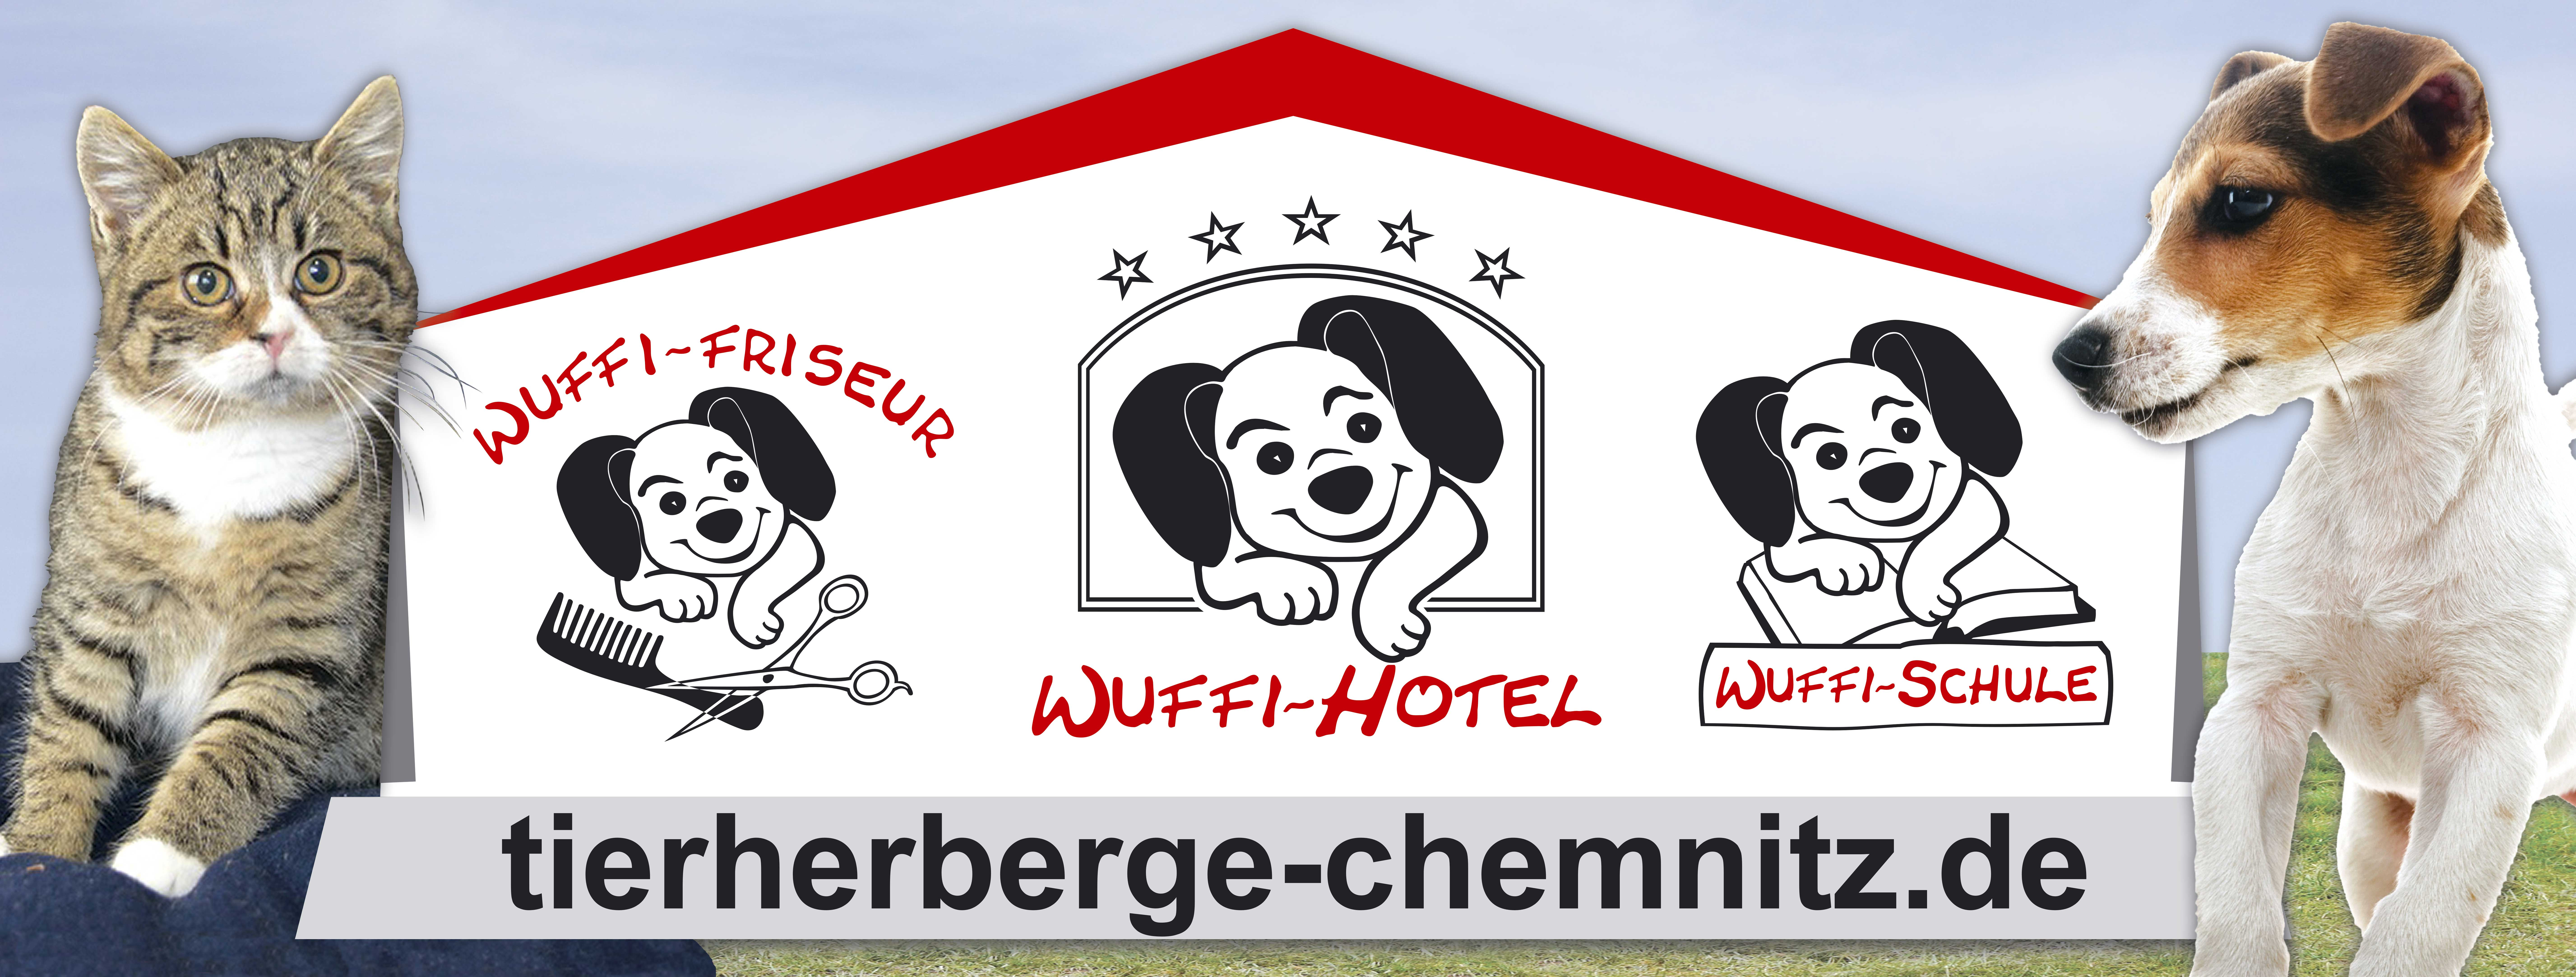 Tierherberge Chemnitz - Wuffihotel | Wuffischule | Wuffifrisör | Wuffitherapie